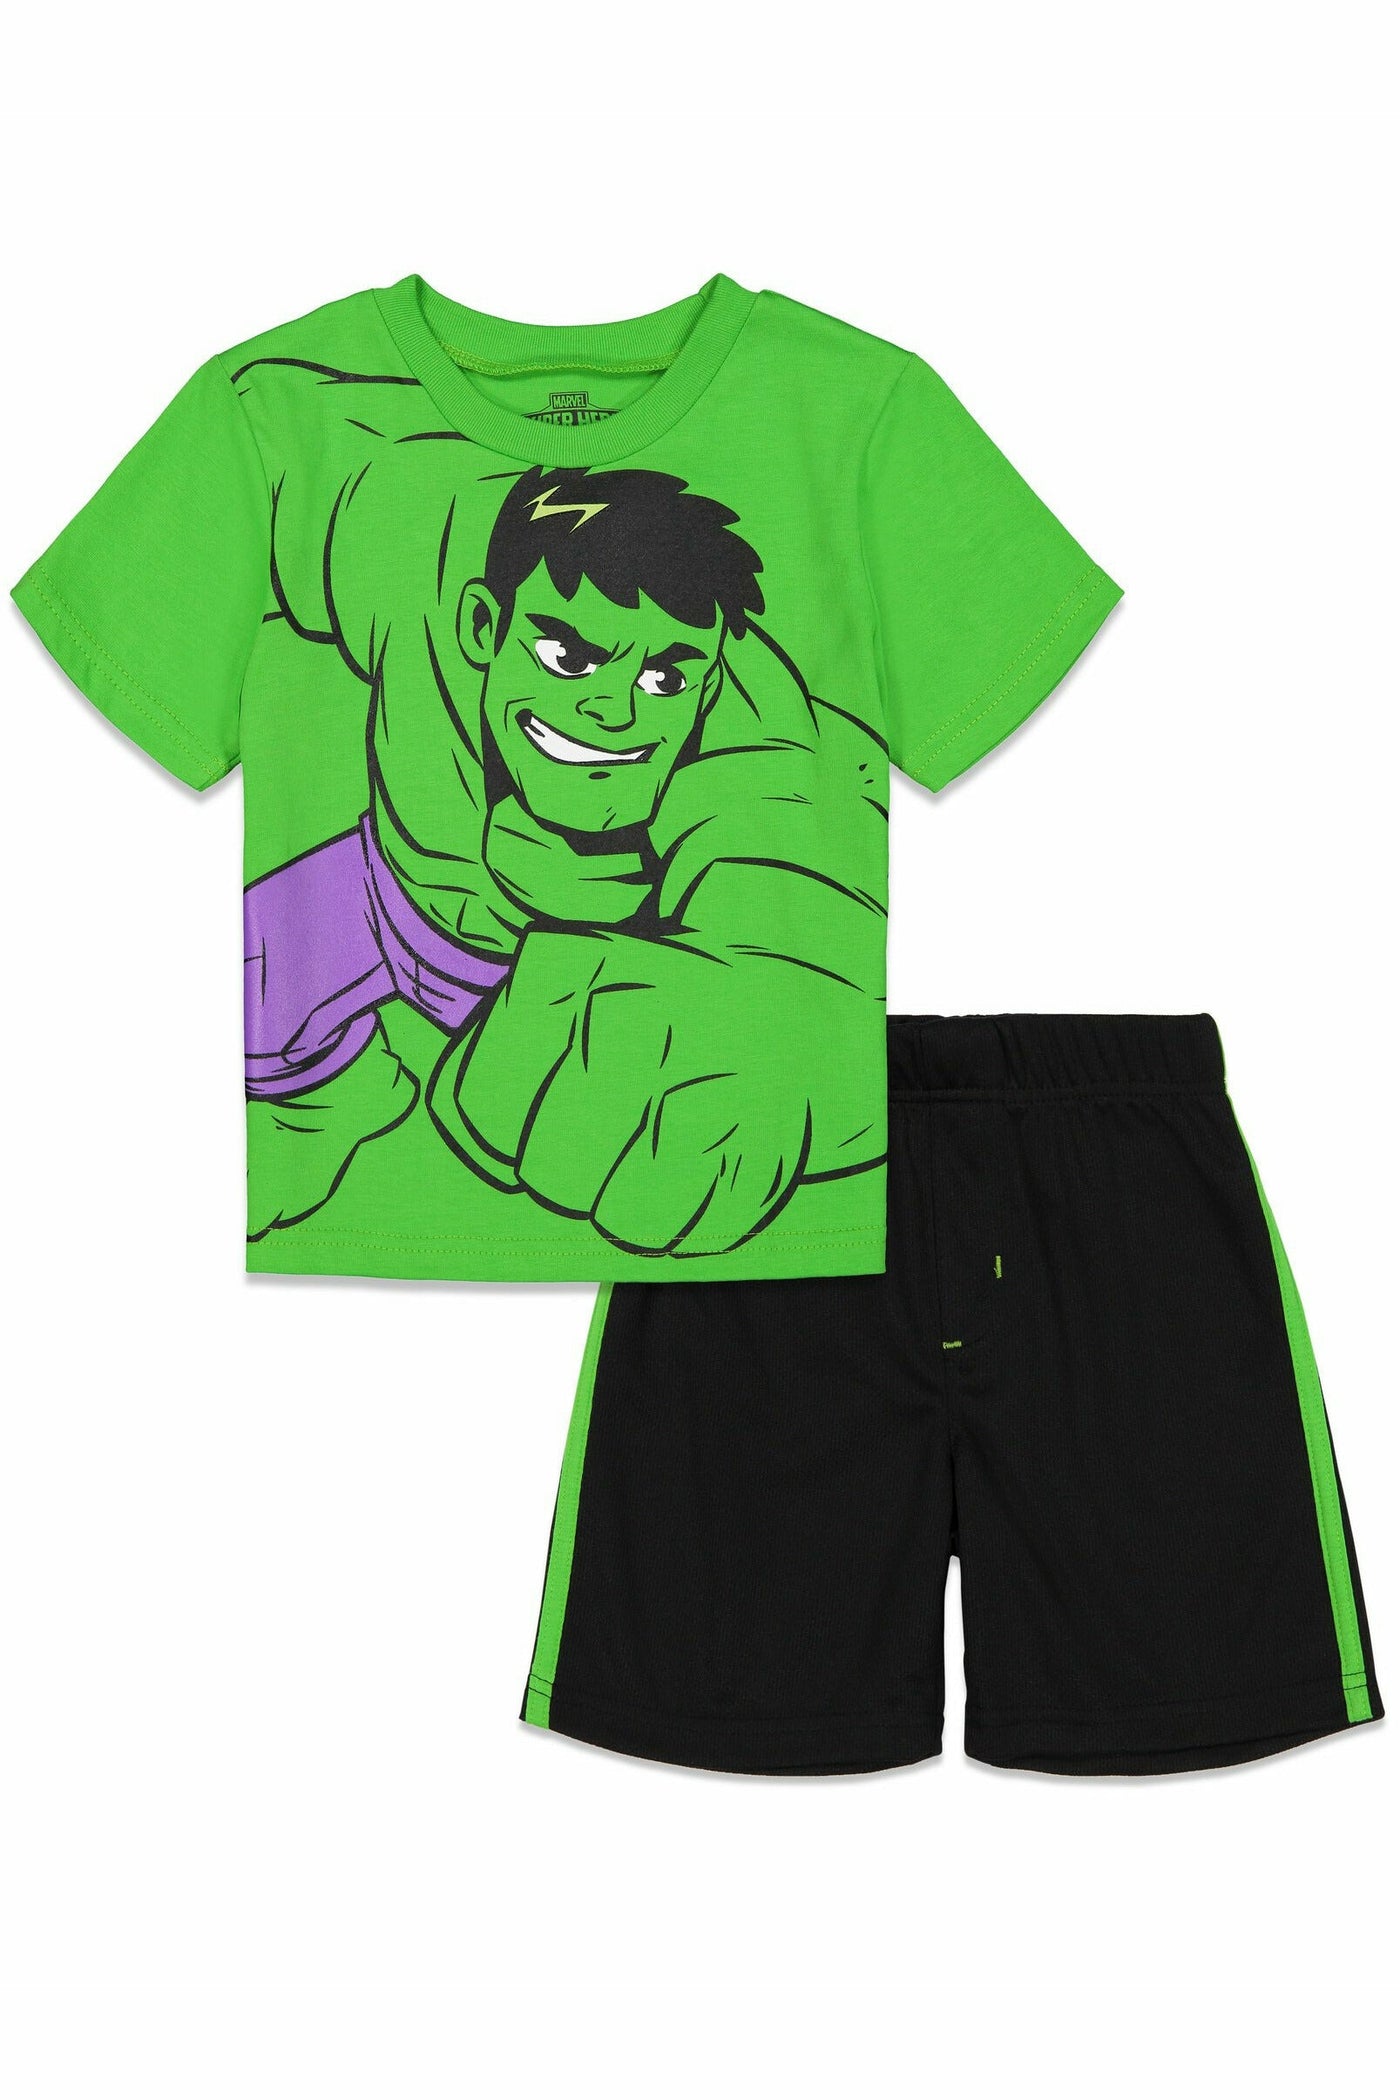 Marvel Avengers Hulk Graphic T-Shirt & Shorts Set